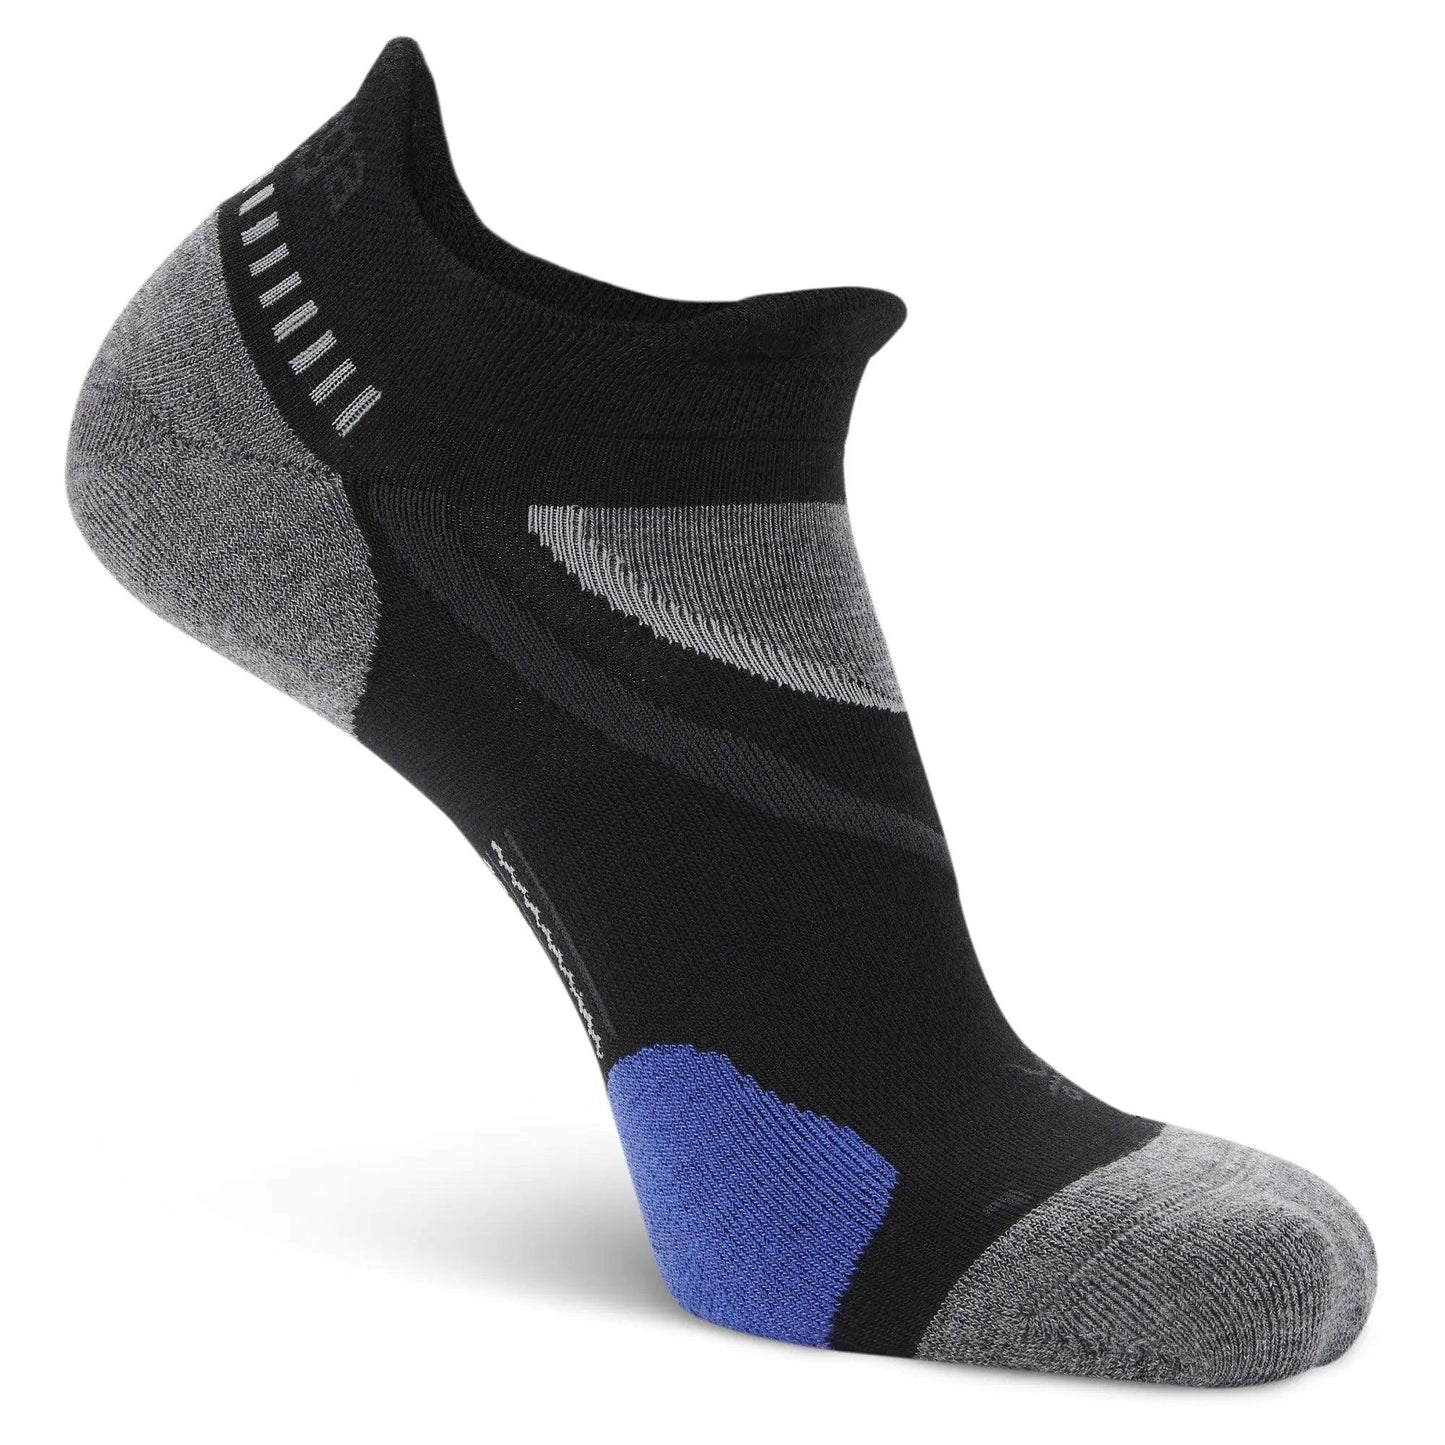 Balega Ultraglide Sock - The Sweat Shop